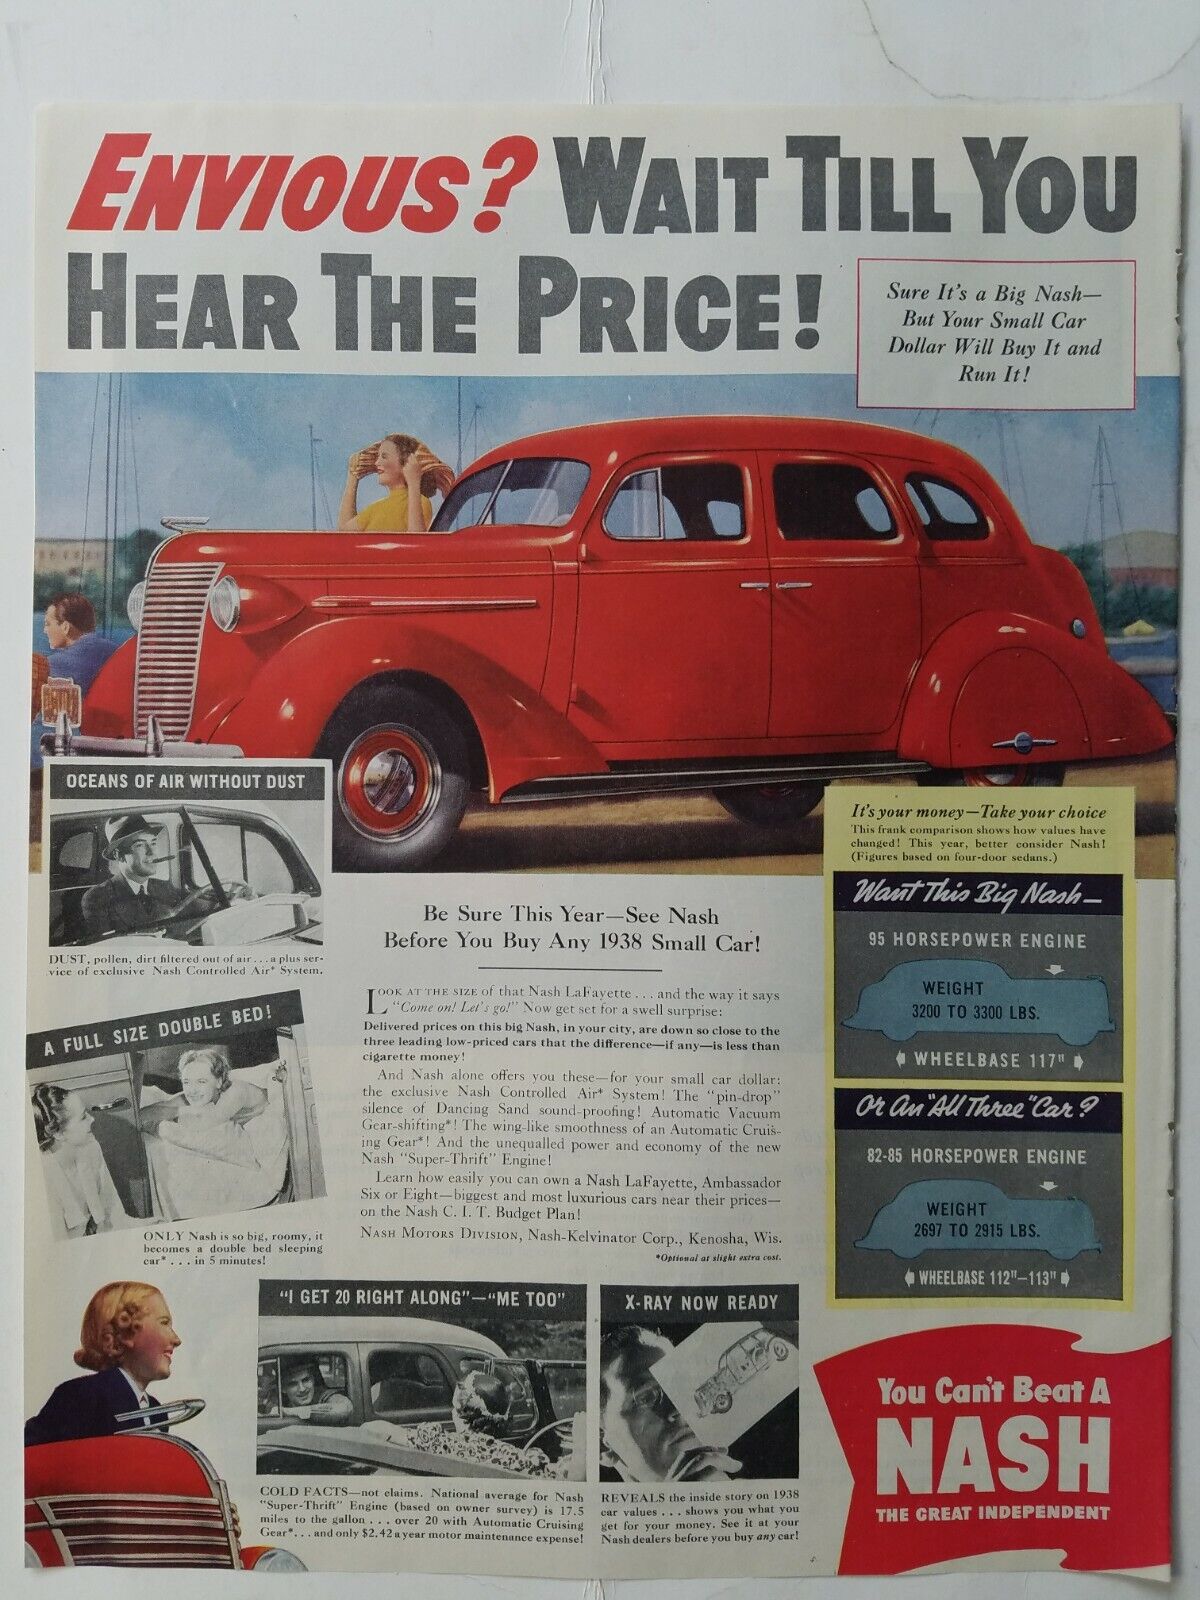 1938 red Nash Lafayette Car wait till you hear the price vintage color ad